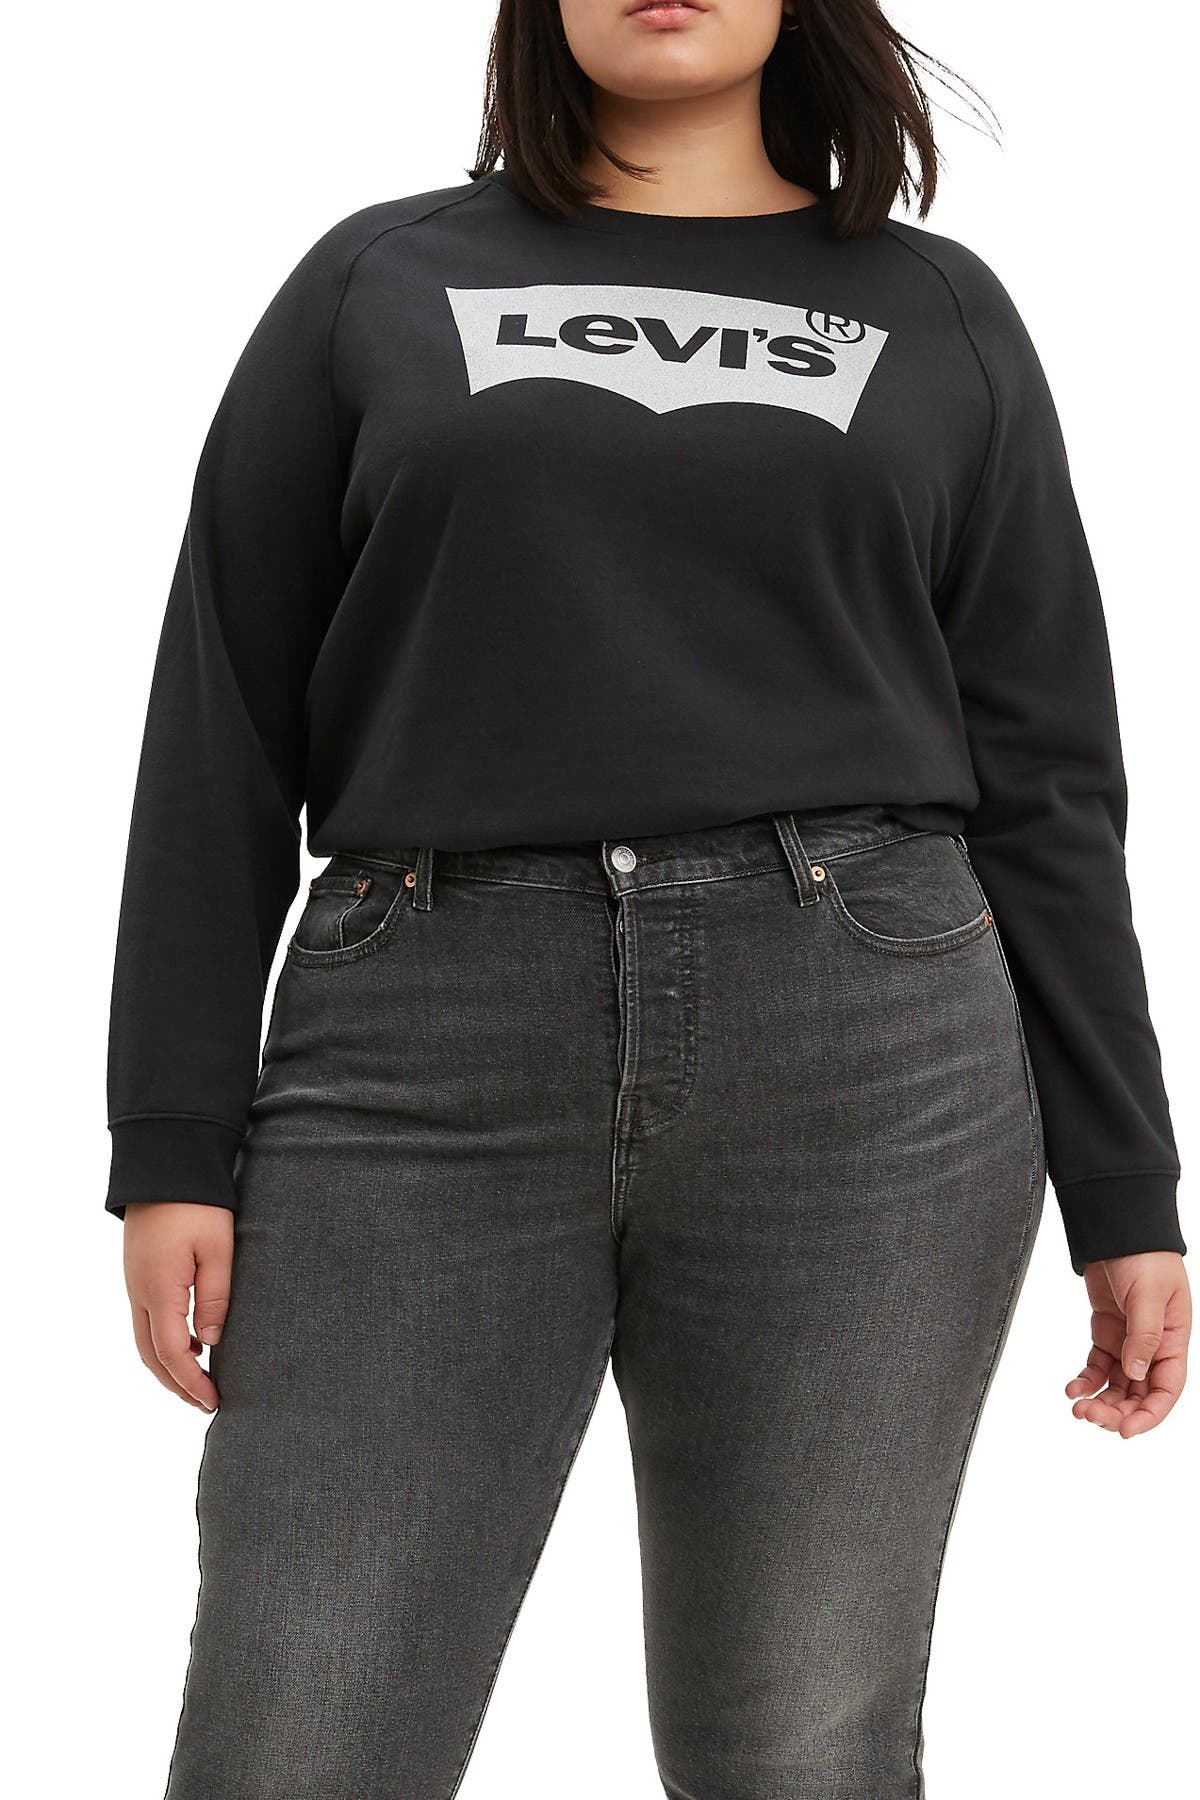 levi's sweaters womens